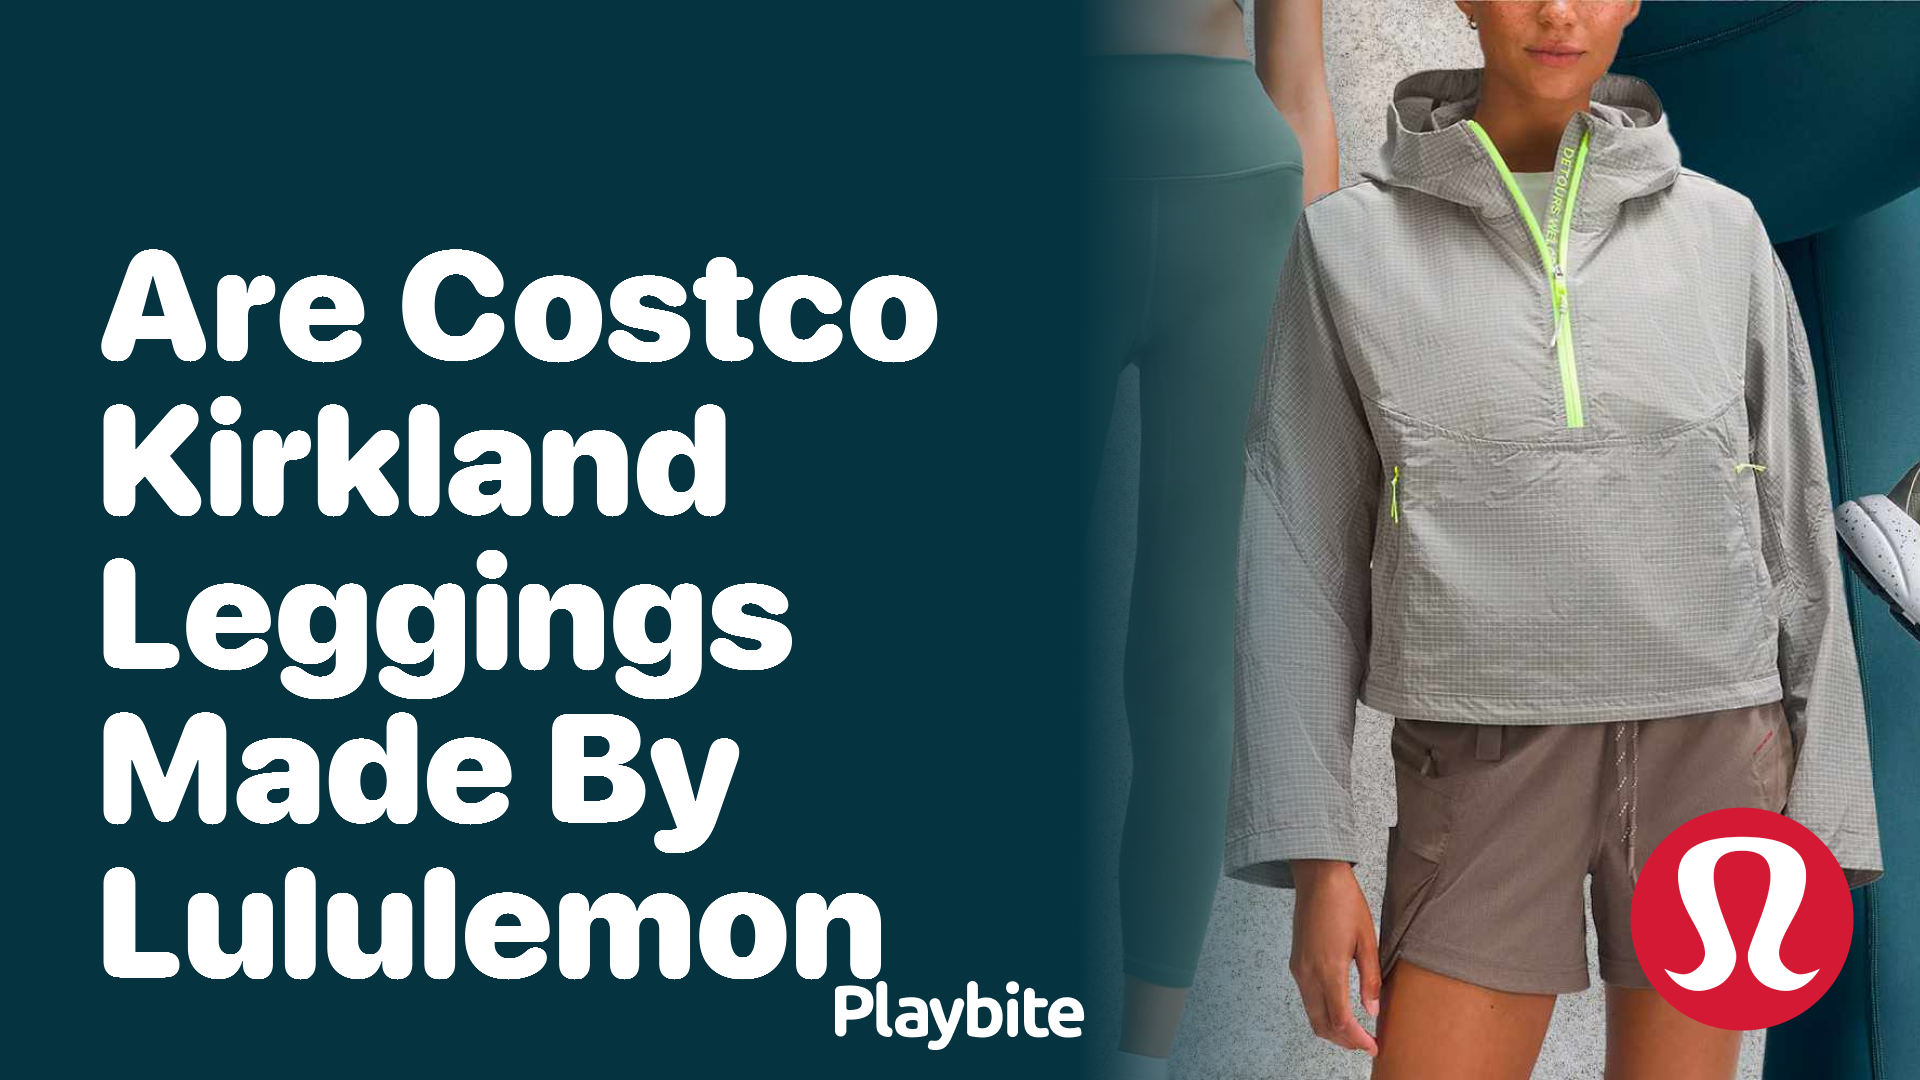 Are Costco Kirkland Leggings Made by Lululemon? - Playbite